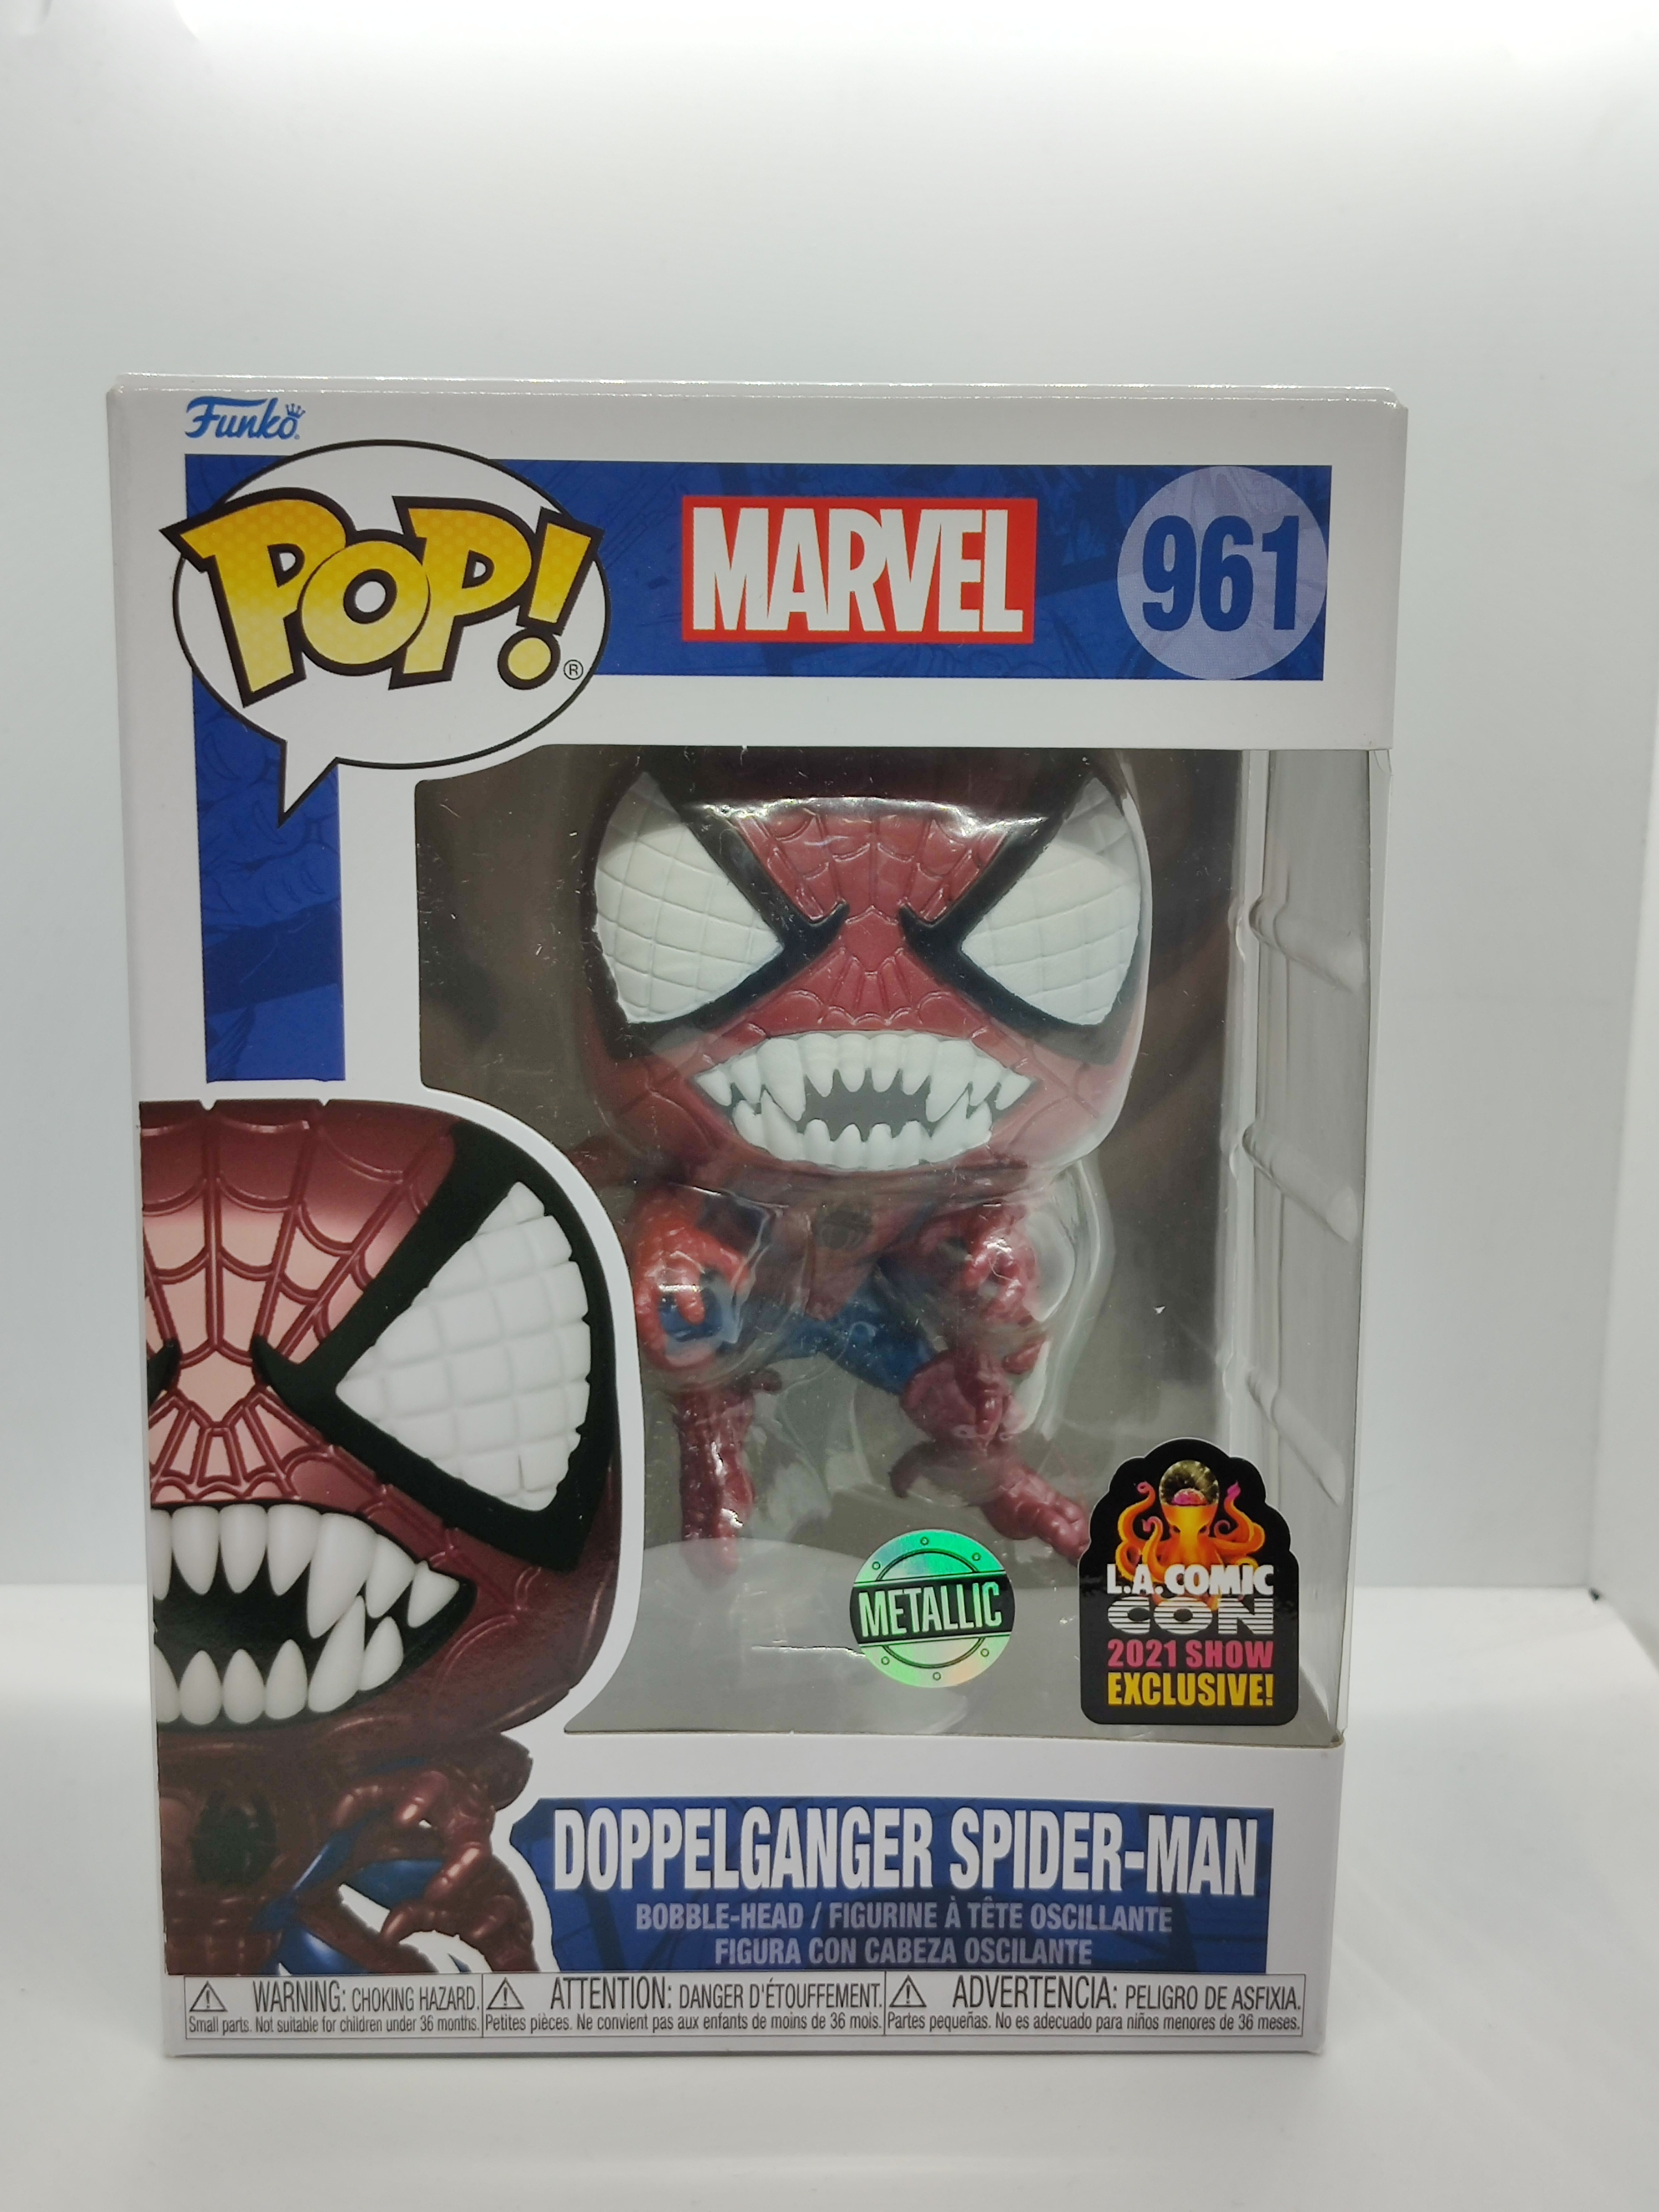 Funko Pop! Marvel - Doppelganger Spiderman #961 Metallic LACC 2021 Show Exclusive